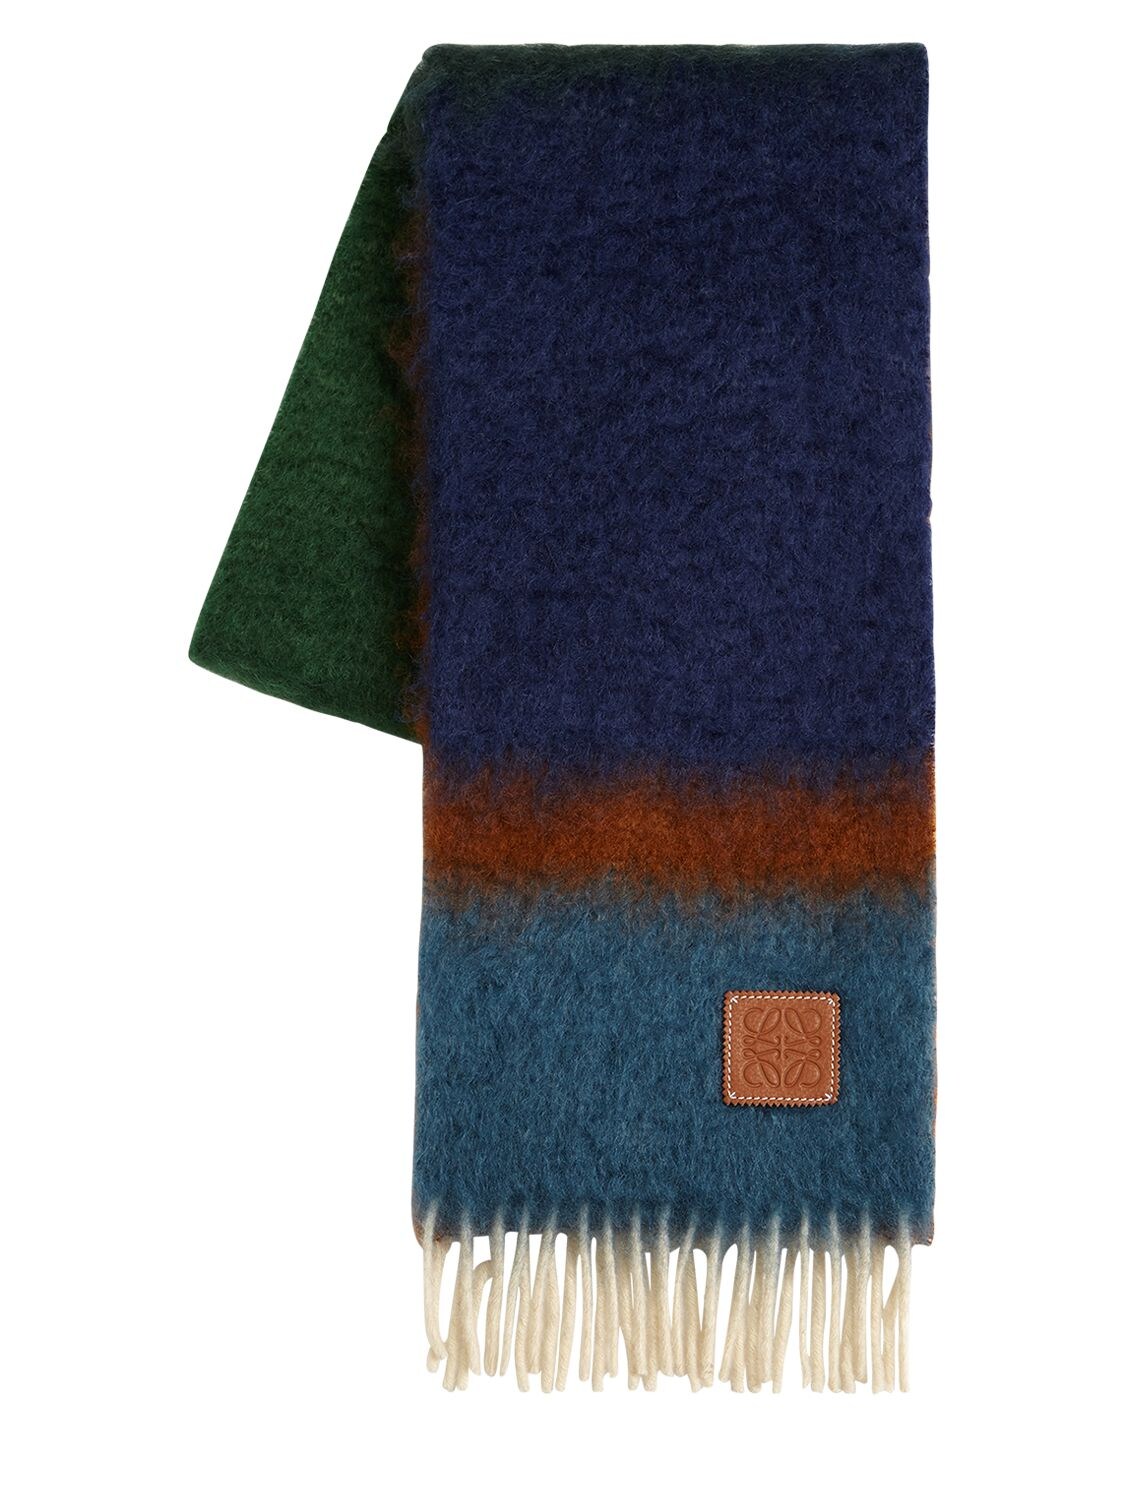 LOEWE 多色羊毛&马海毛围巾,72IIJE040-MJK5MW2